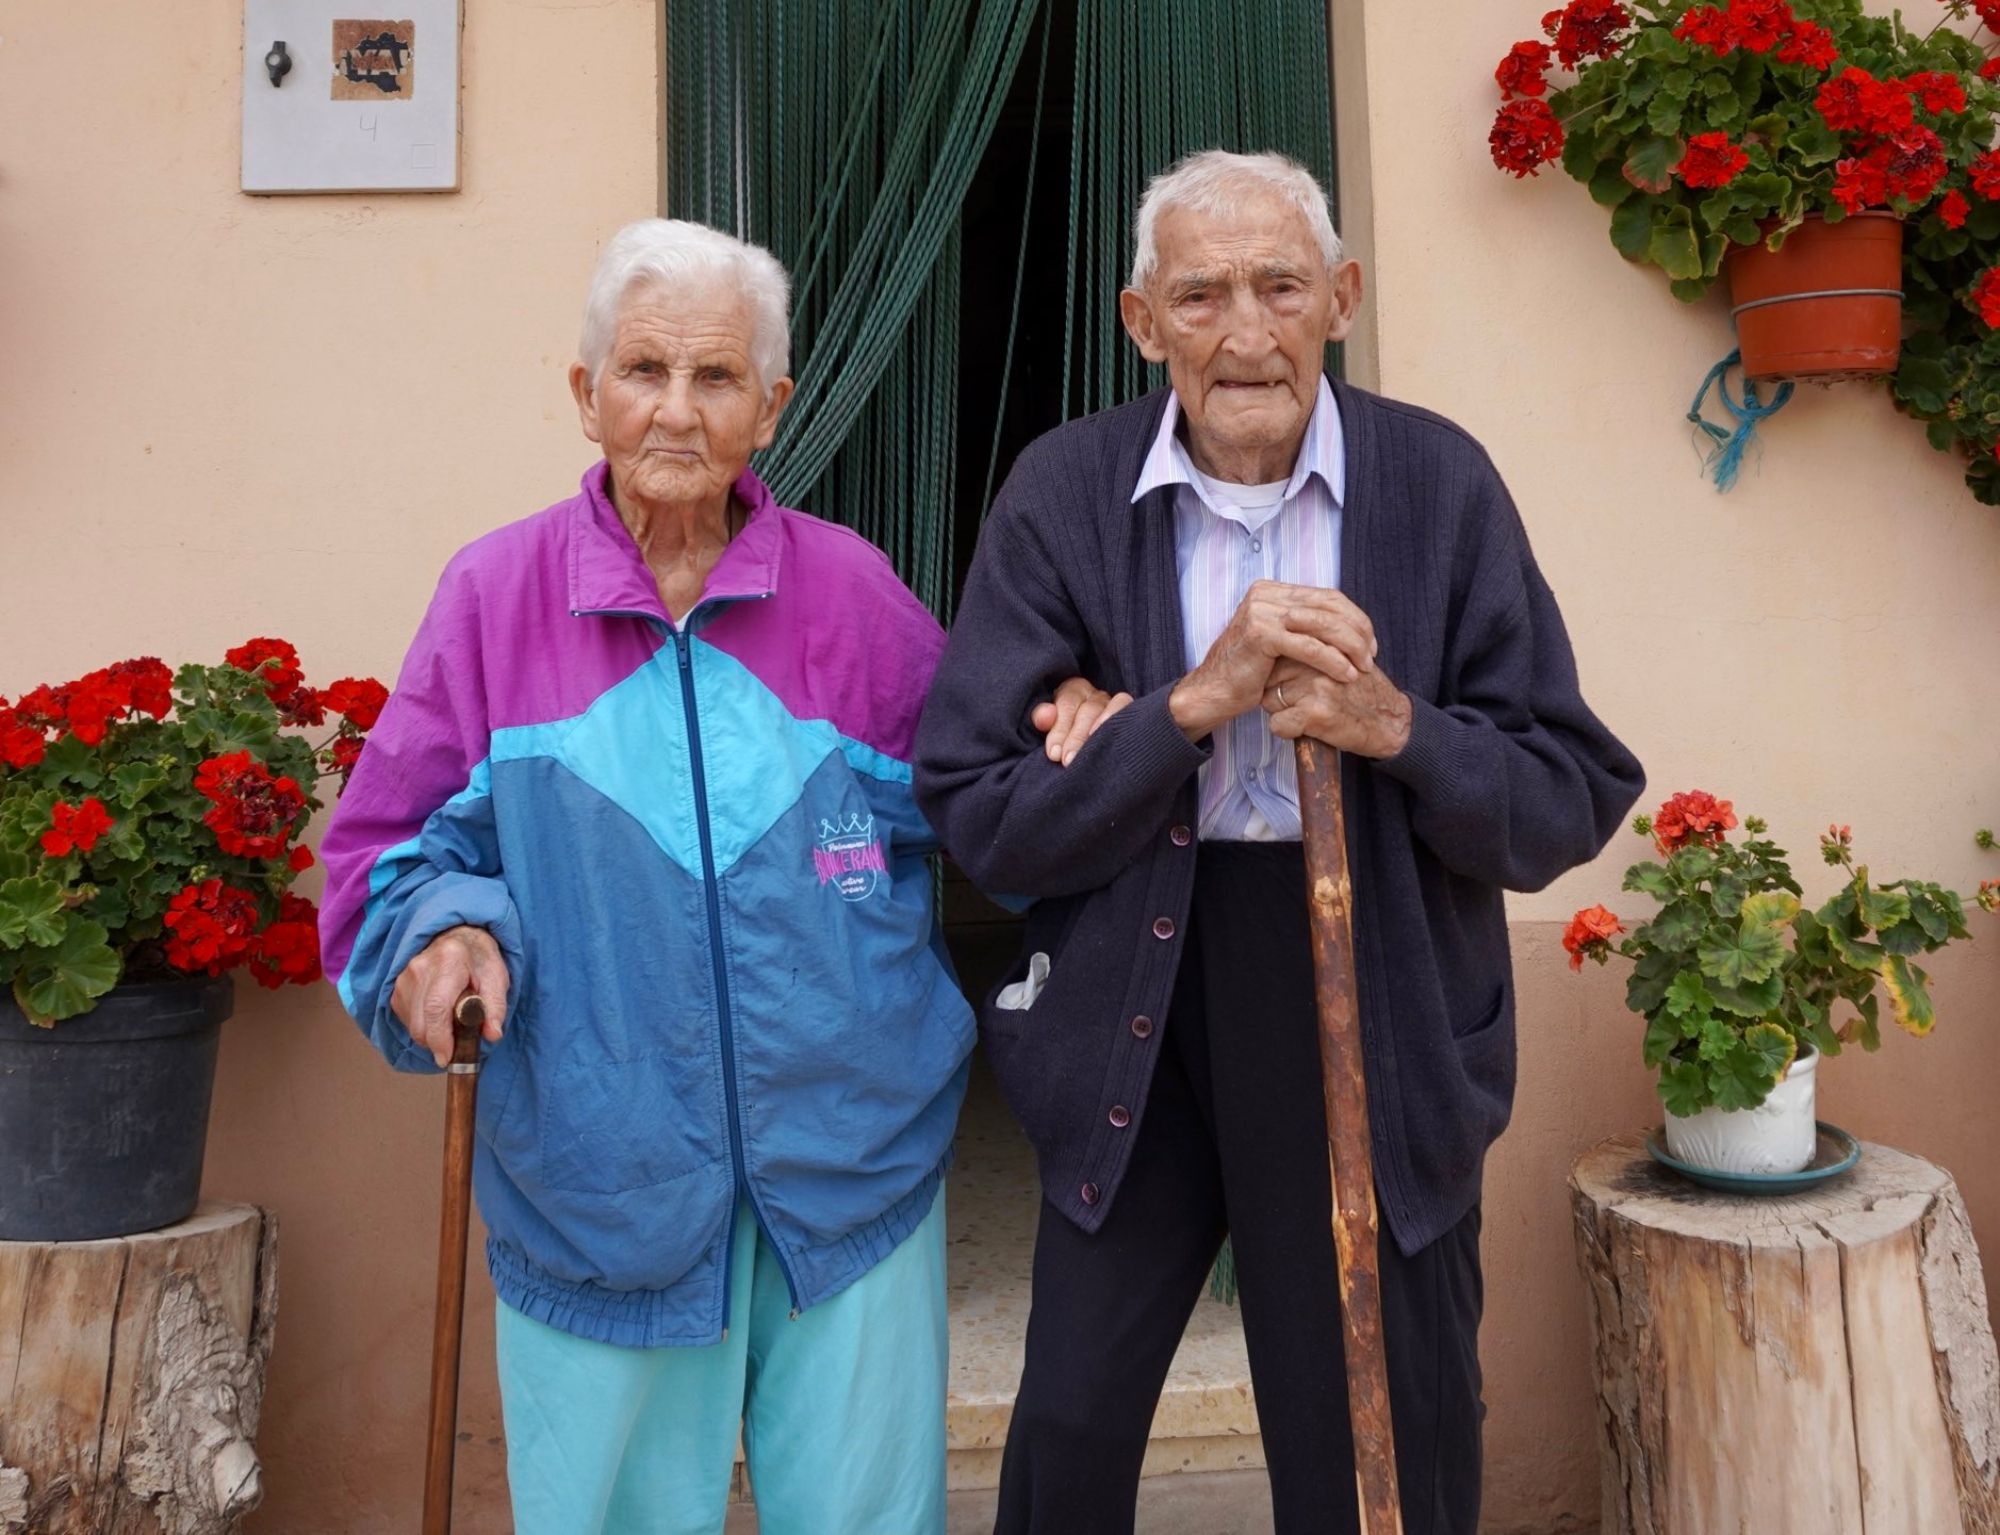 Un matrimonio de nonagenarios revela su secreto para una vida larga. Foto: Twitter